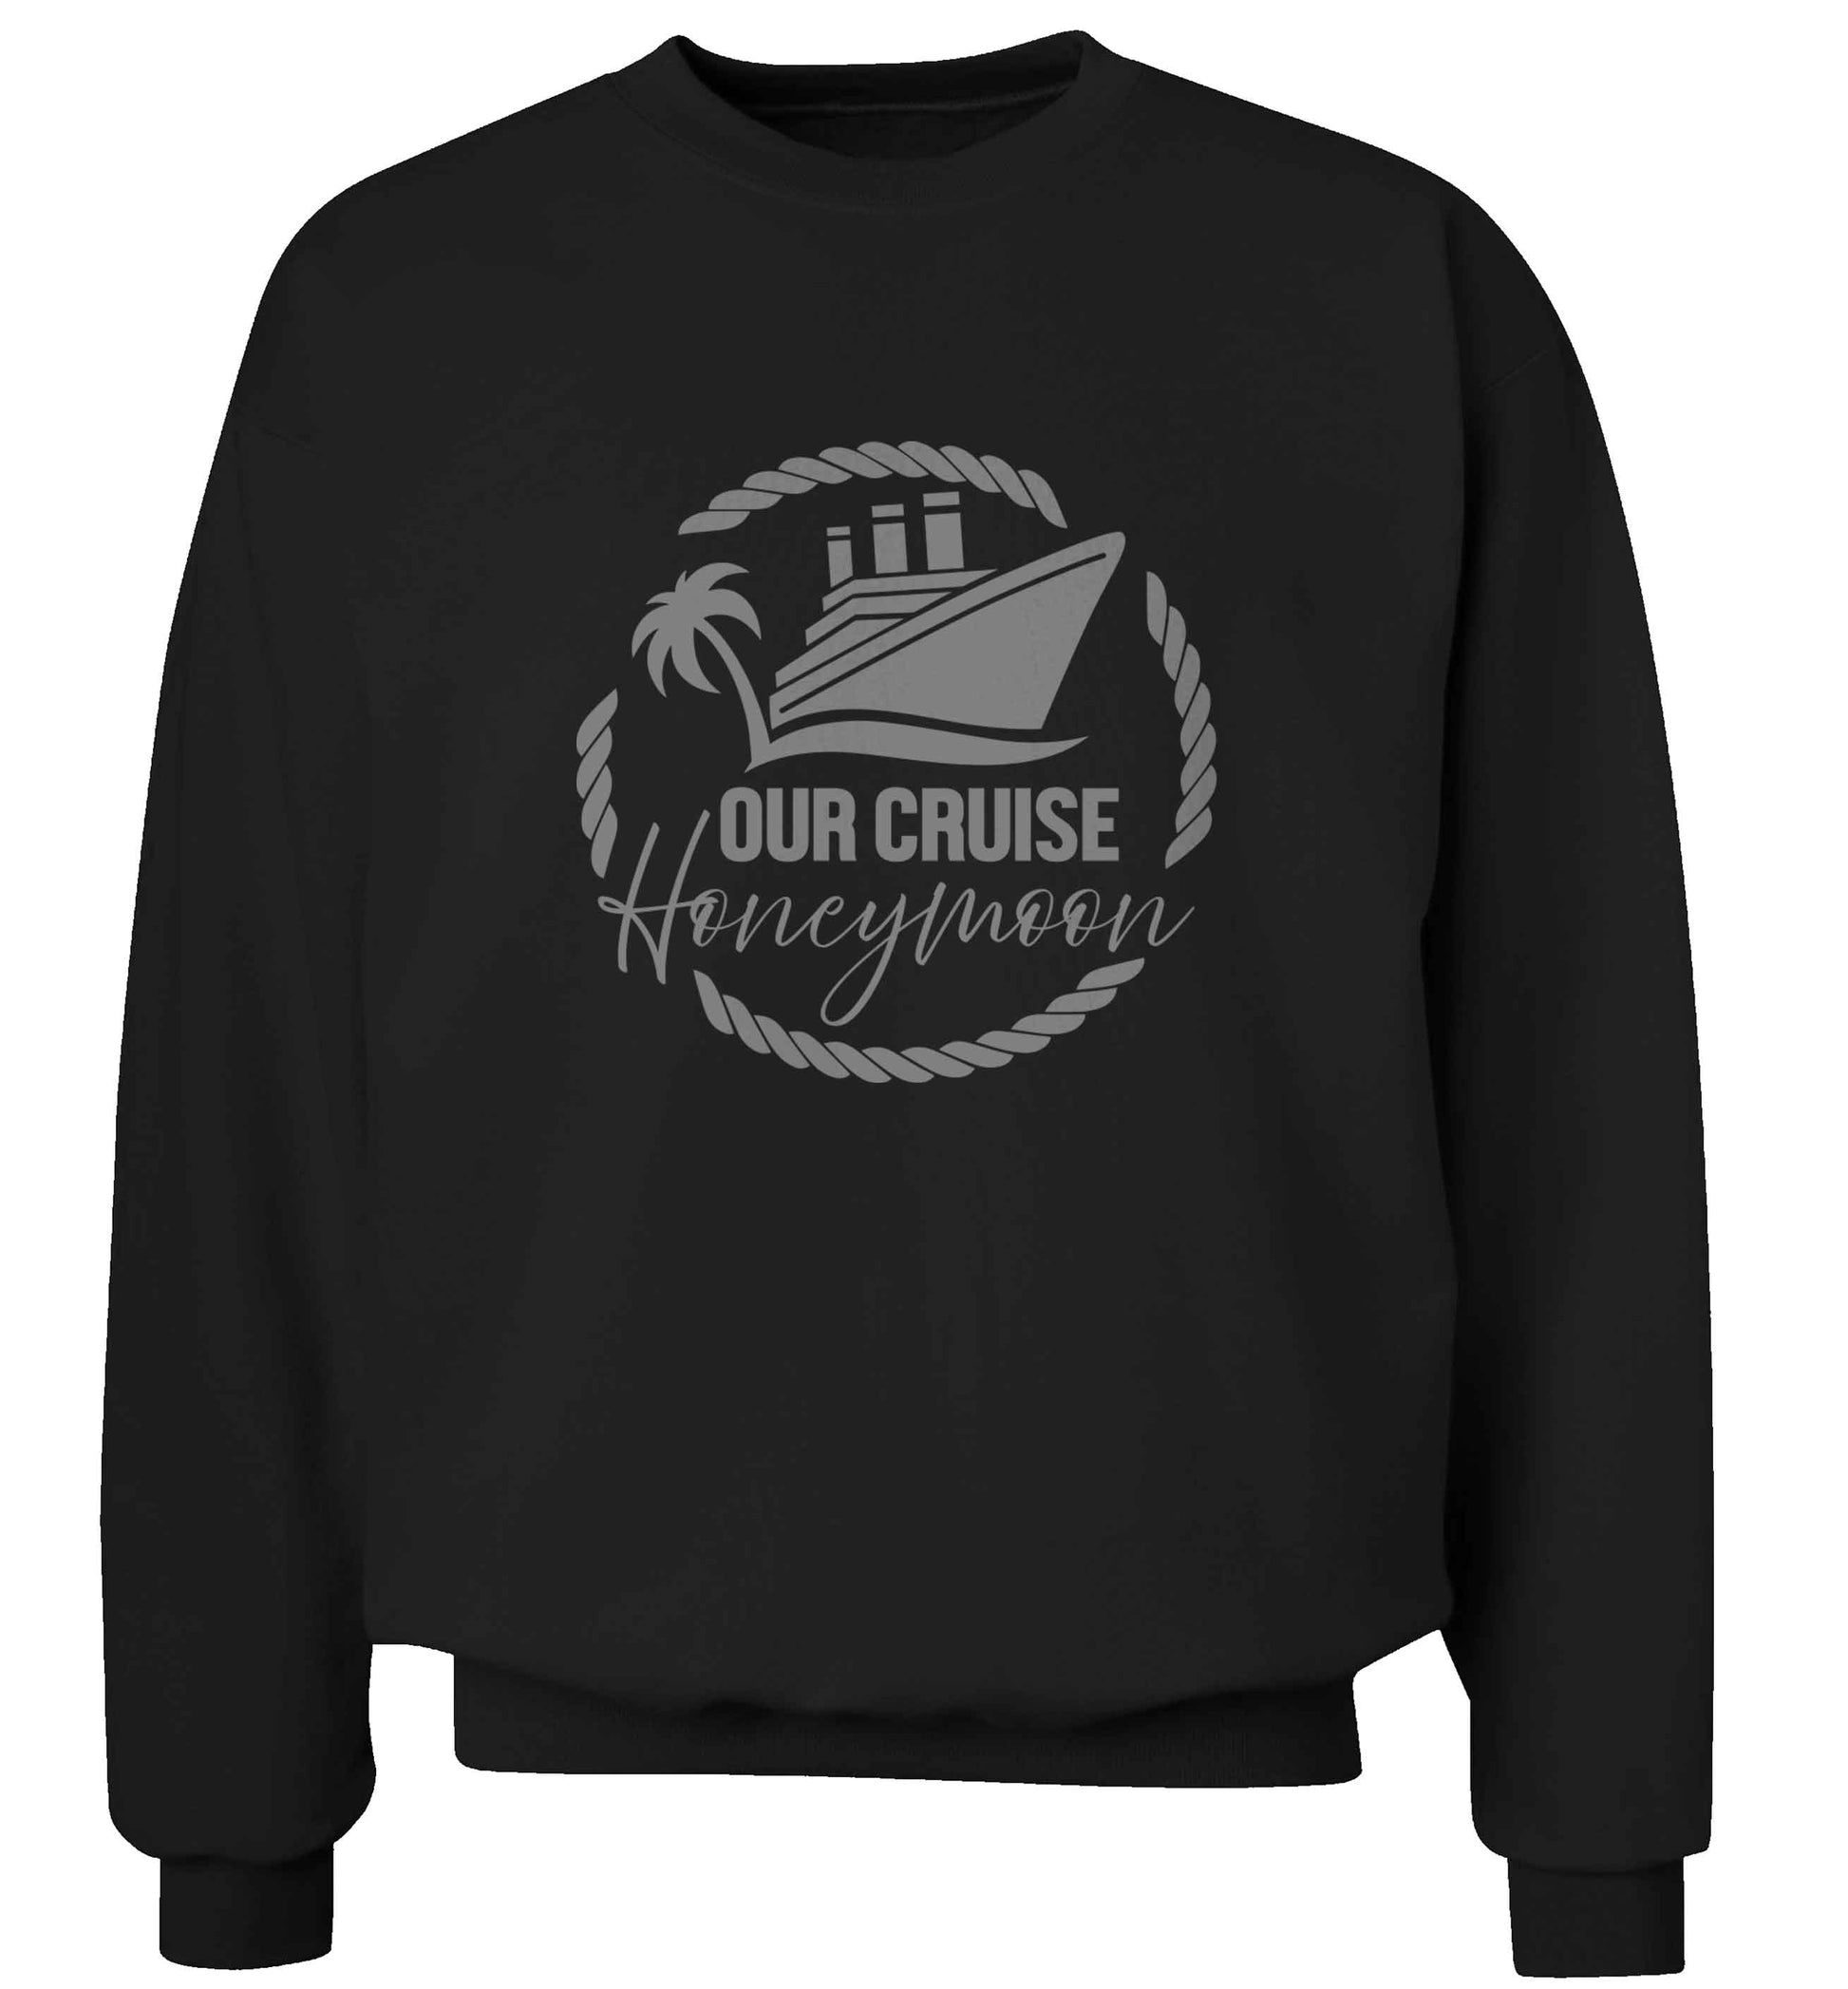 Our cruise honeymoon adult's unisex black sweater 2XL